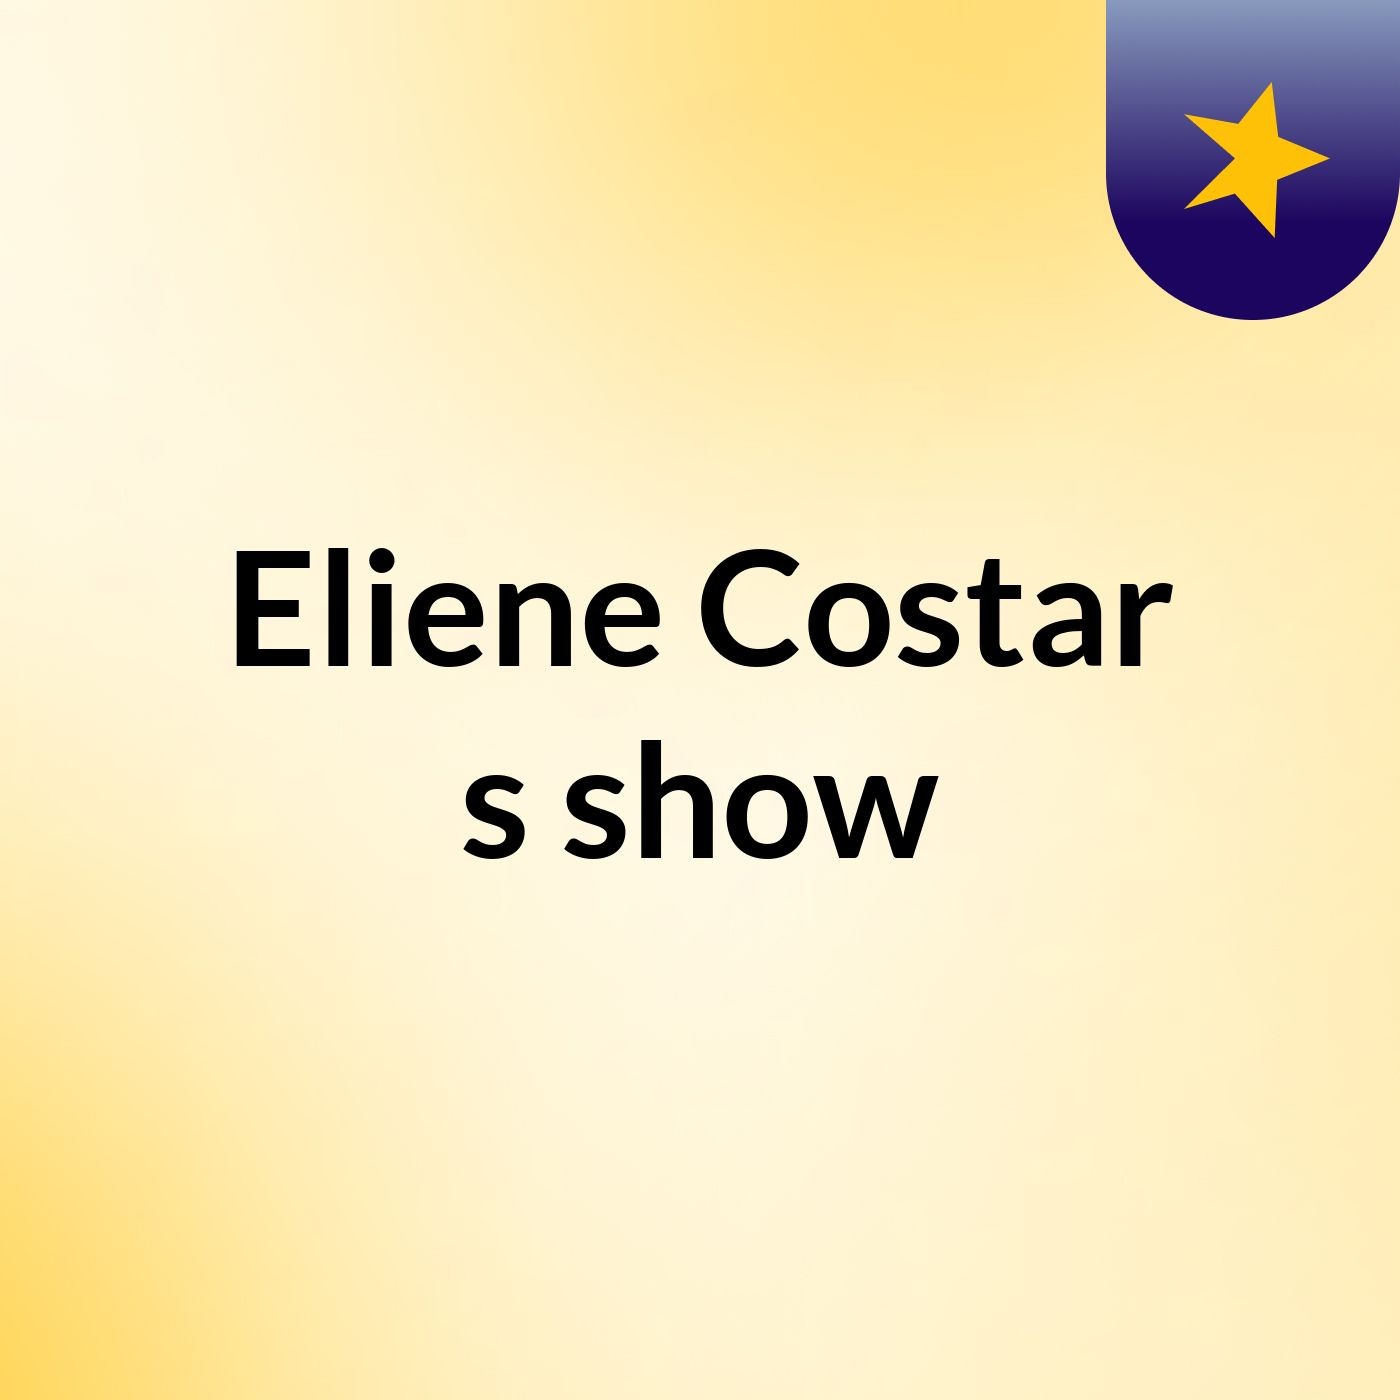 Eliene Costar's show